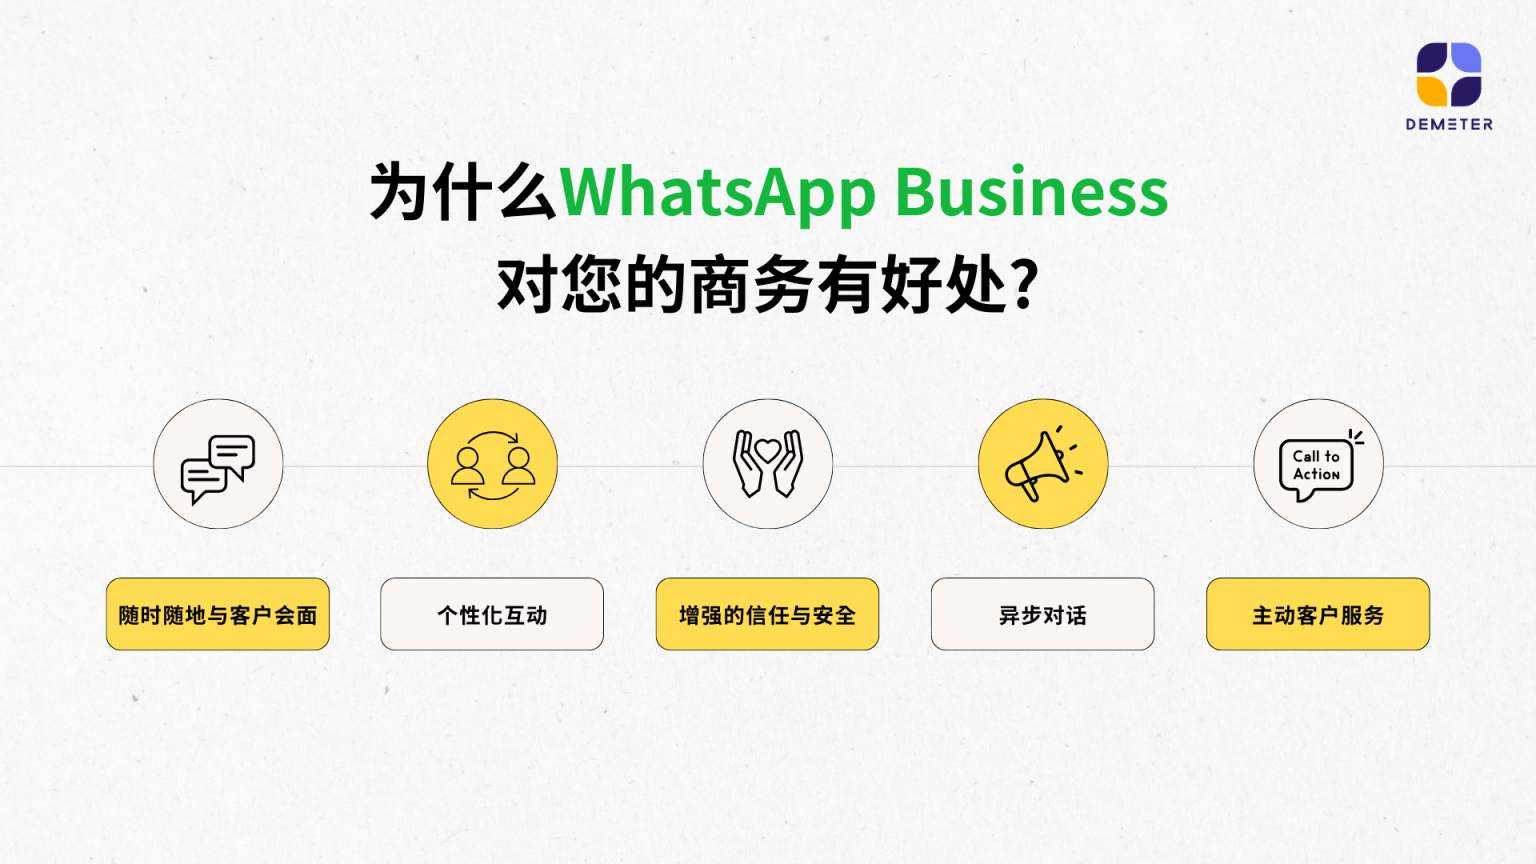 Whatapp Business